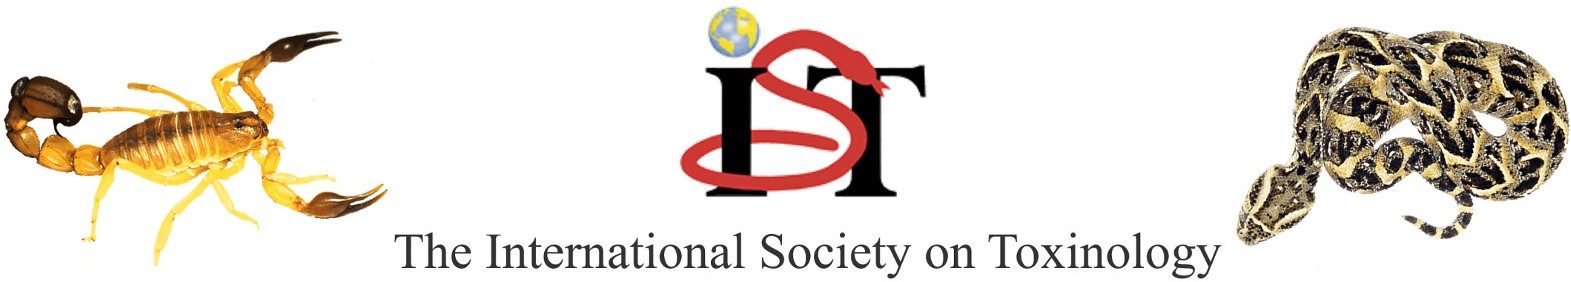 The International Society on Toxinology